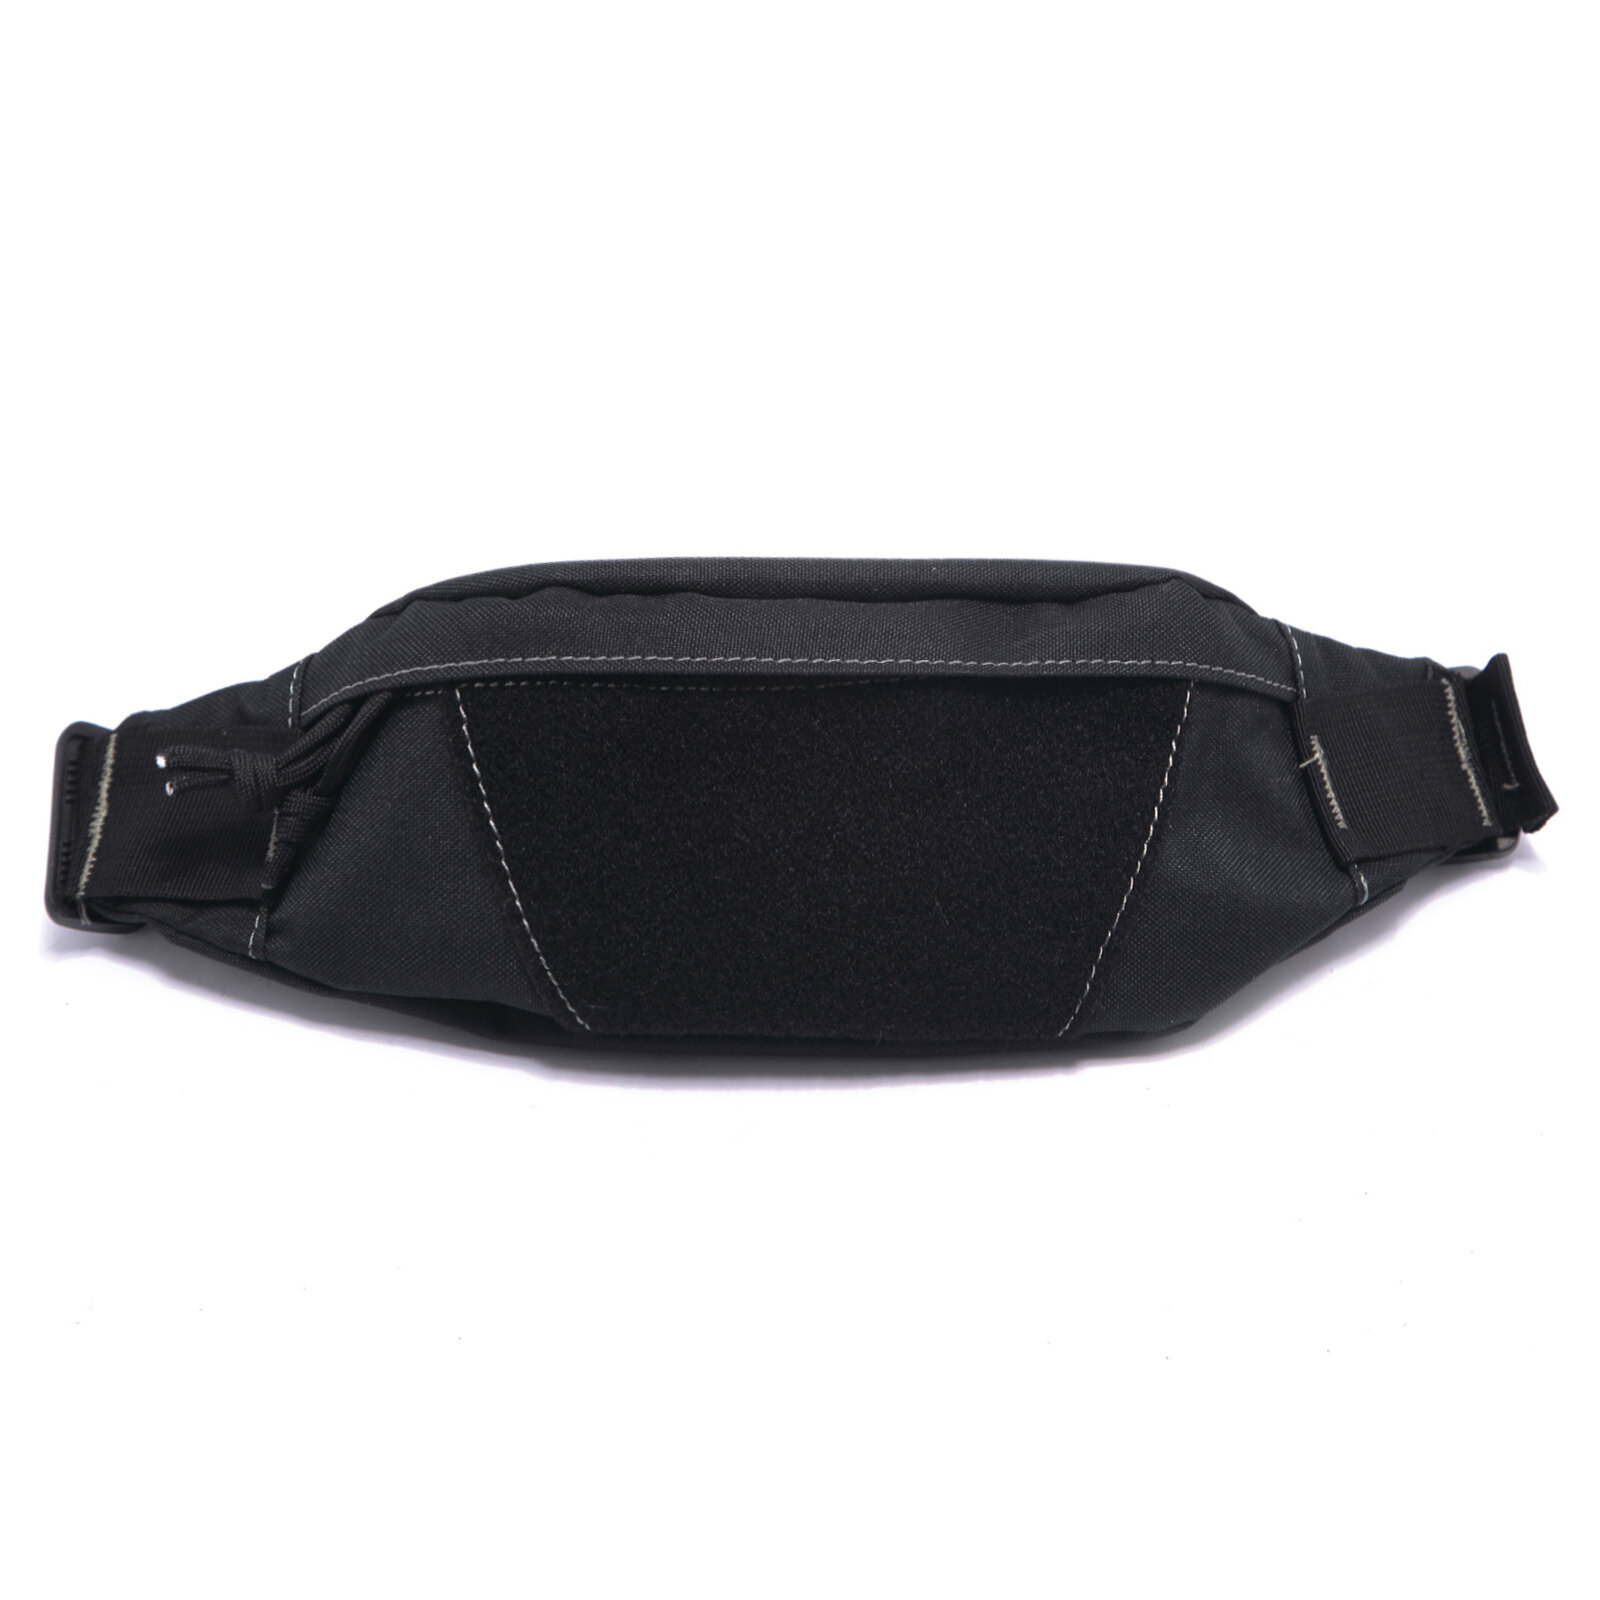 Camouflage Tactical Waist Bag Cross Bag Tactical Waist Bag Outdoor Fitness Leisure Bag 